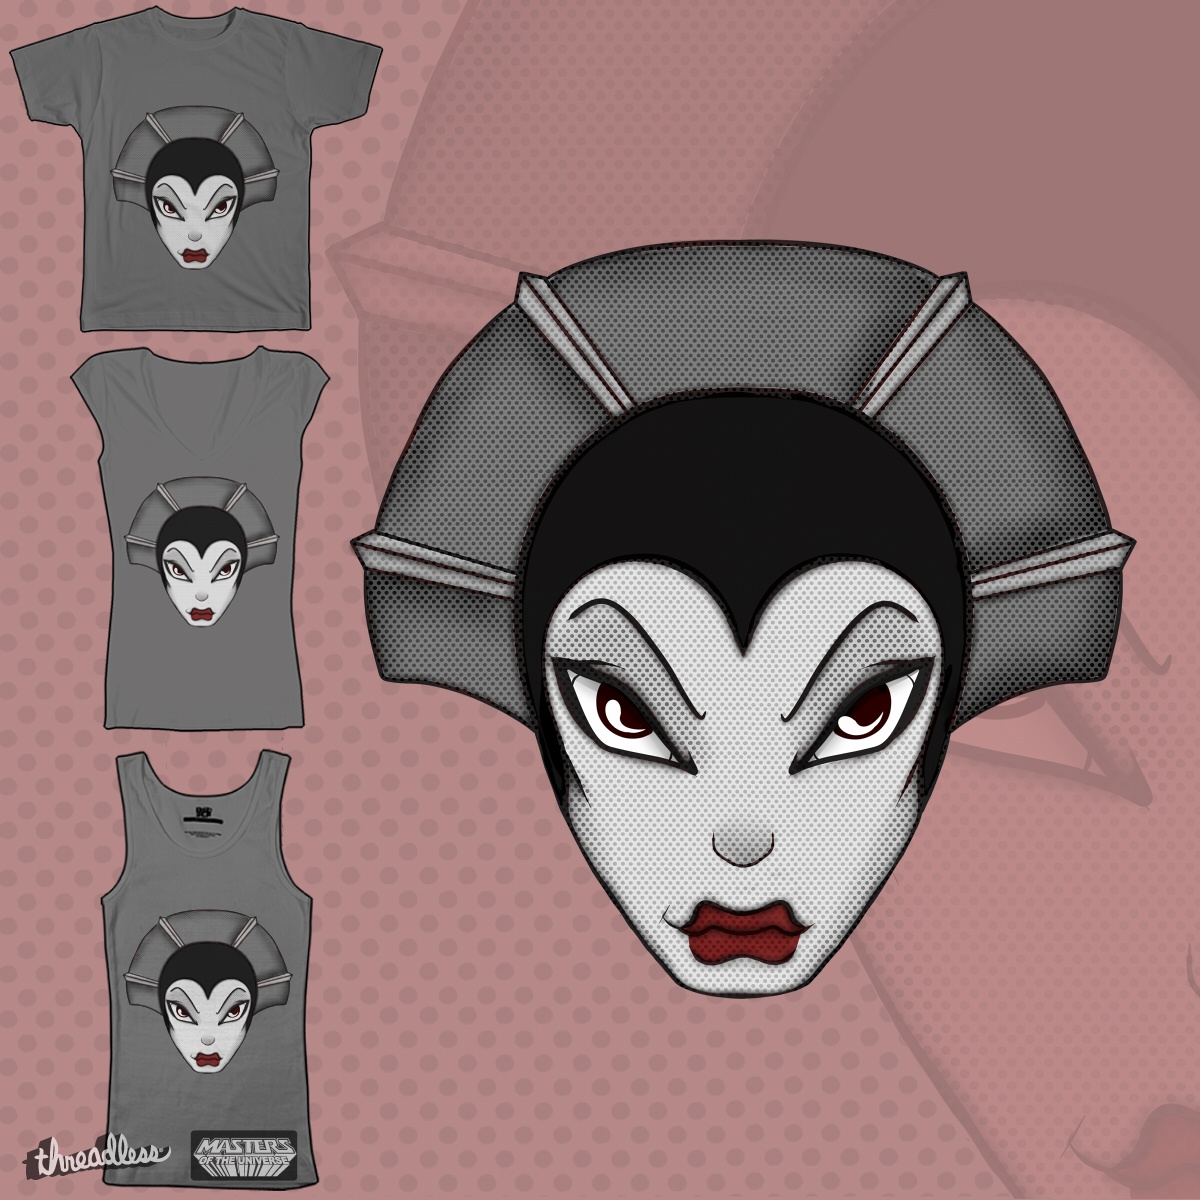 Evil-Lyn, a cool t-shirt design